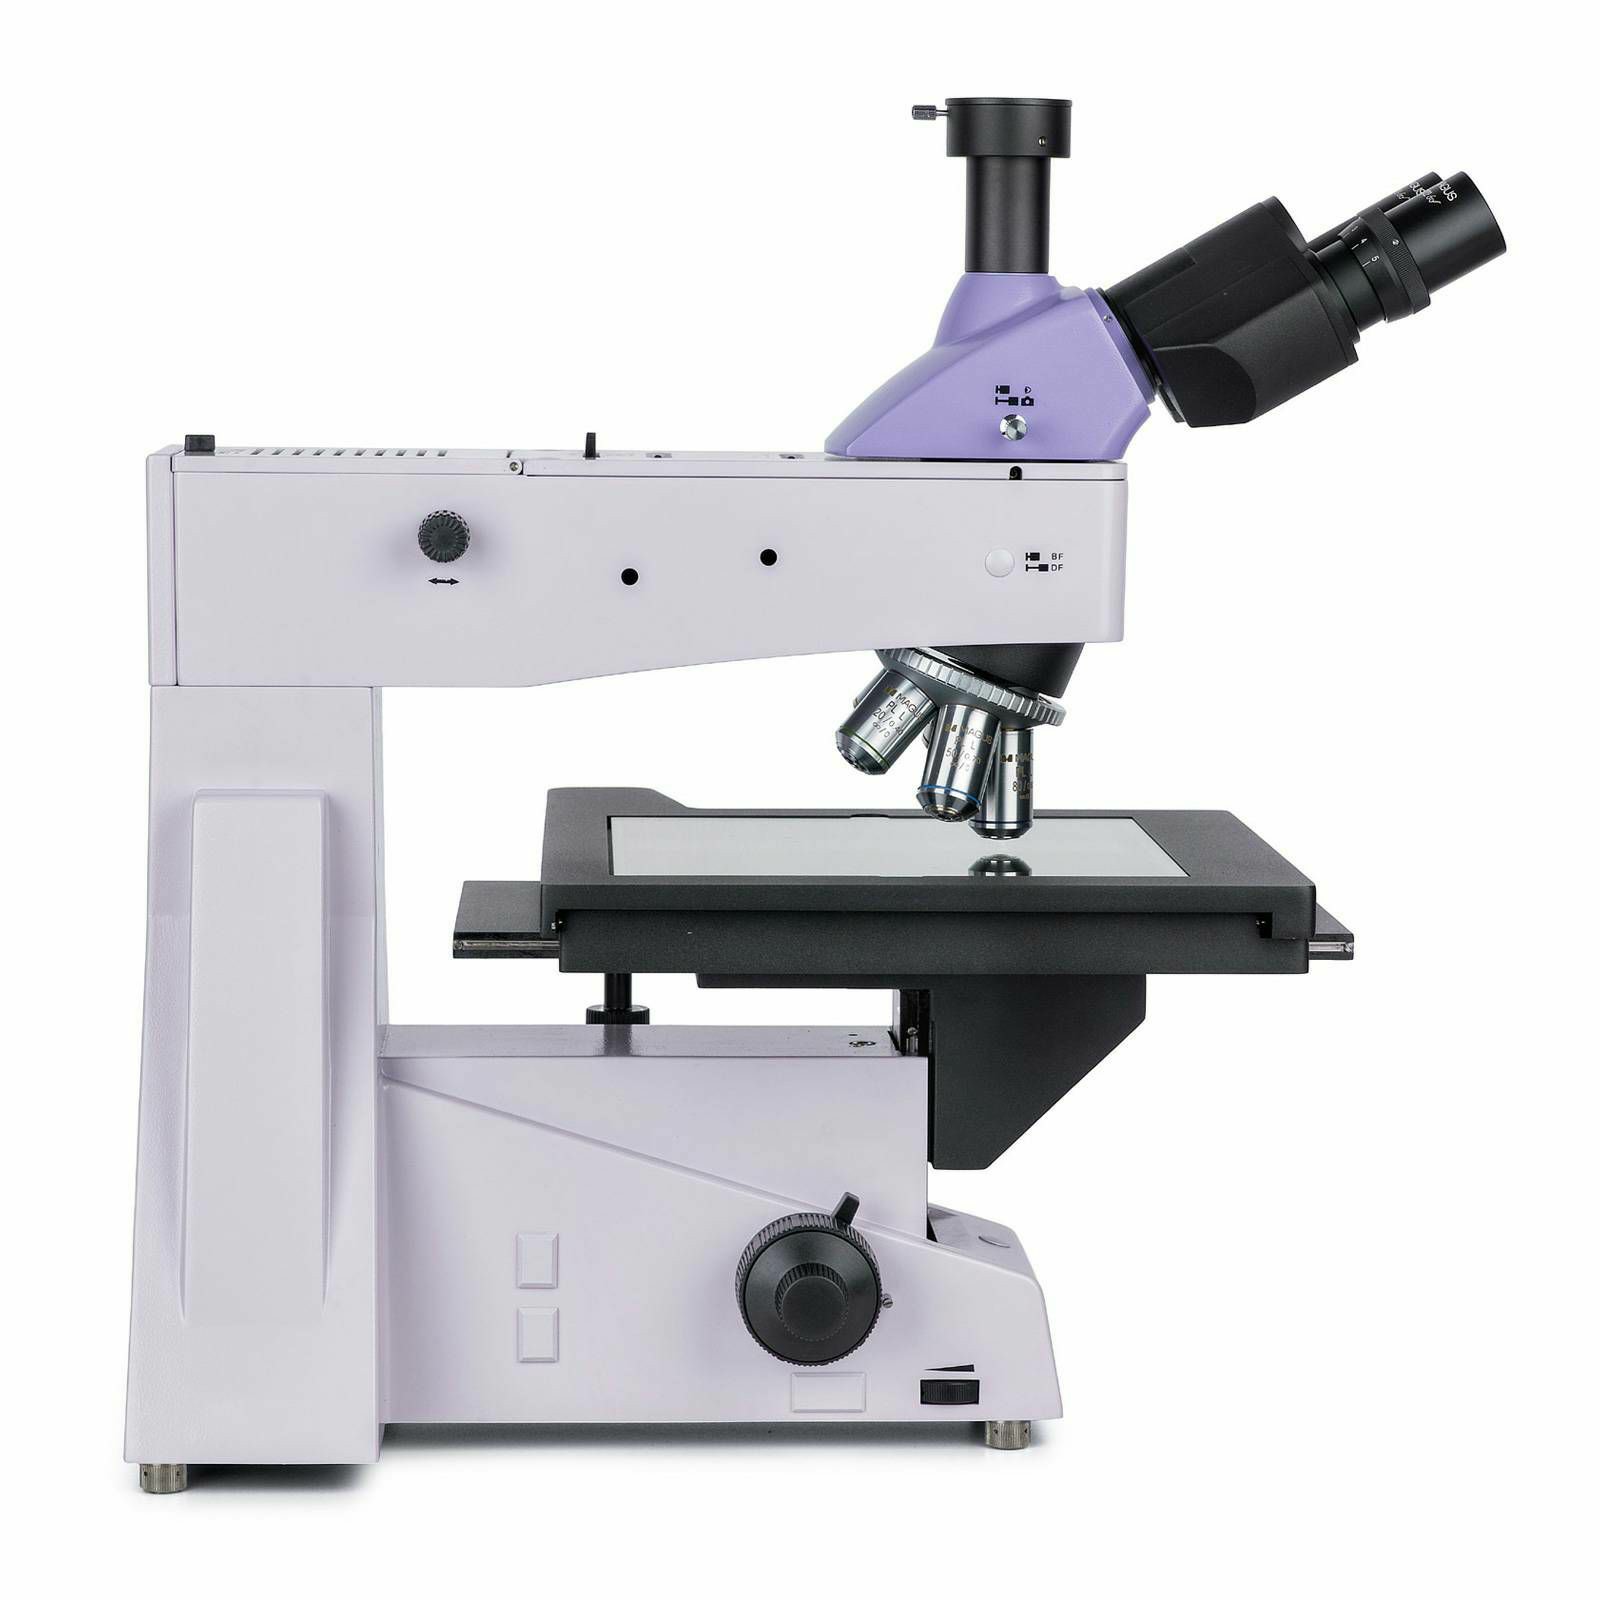 Mikroskop MAGUS Metal D650 LCD Metallurgical Digital